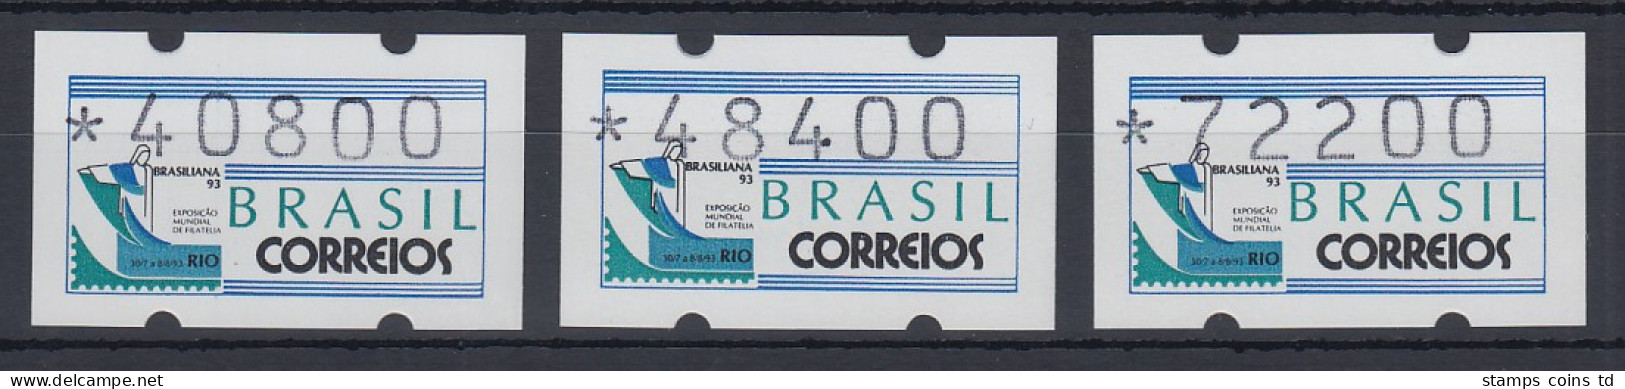 Brasilien Klüssendorf-ATM 1993 BRASILIANA Mi-Nr 5 Satz 40800 - 48400 - 72200 ** - Automatenmarken (Frama)